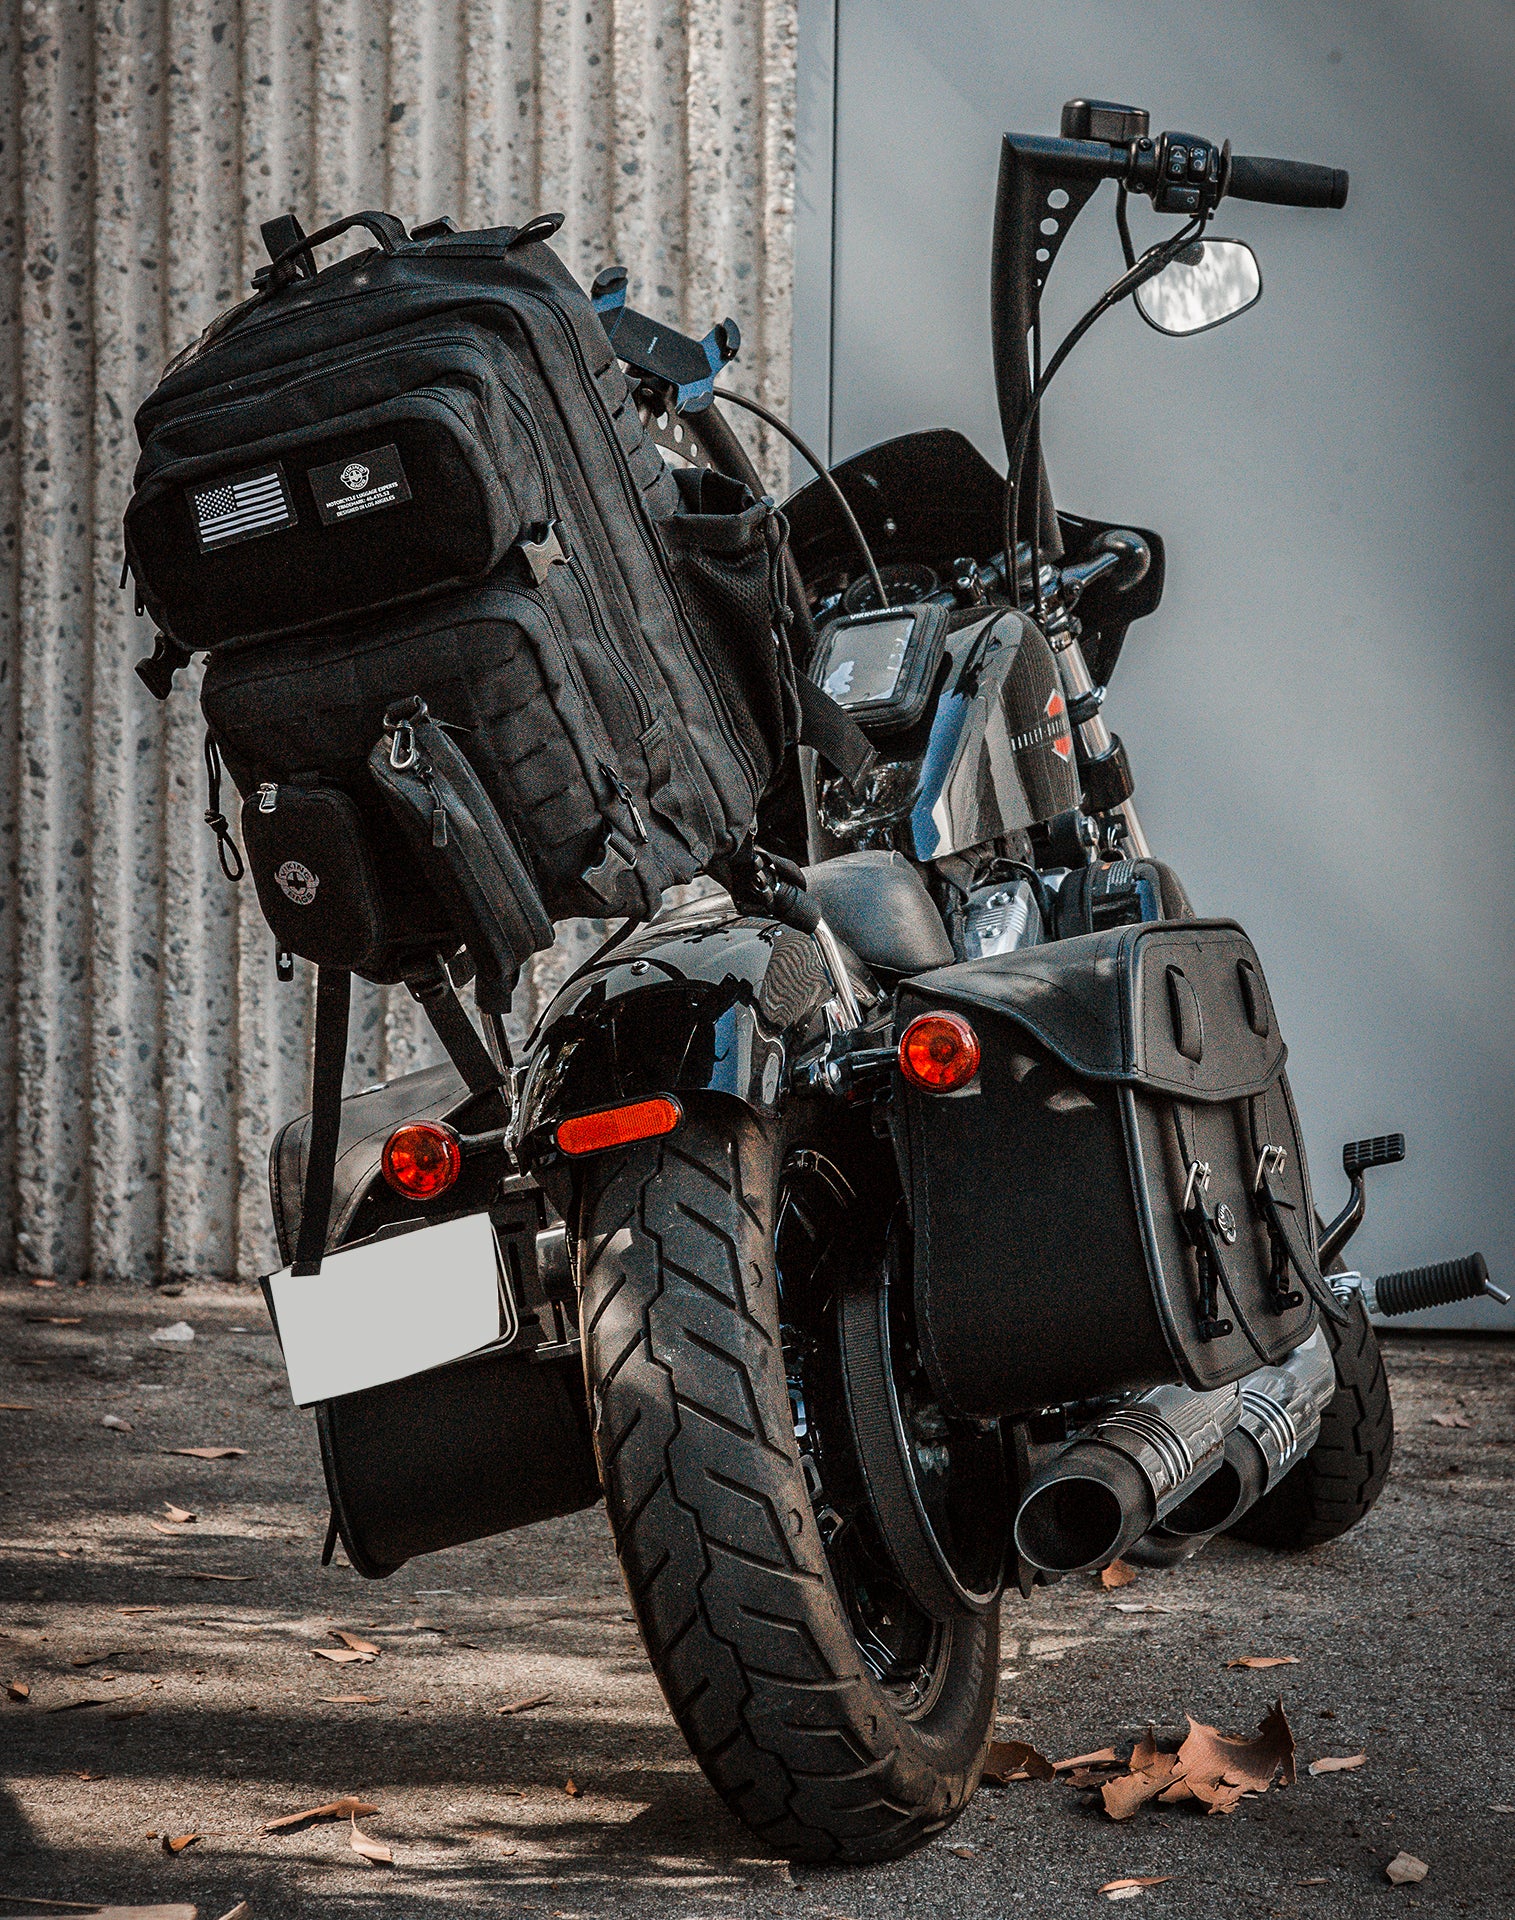 45L - Tactical XL Honda Motorcycle Sissy Bar Backpack